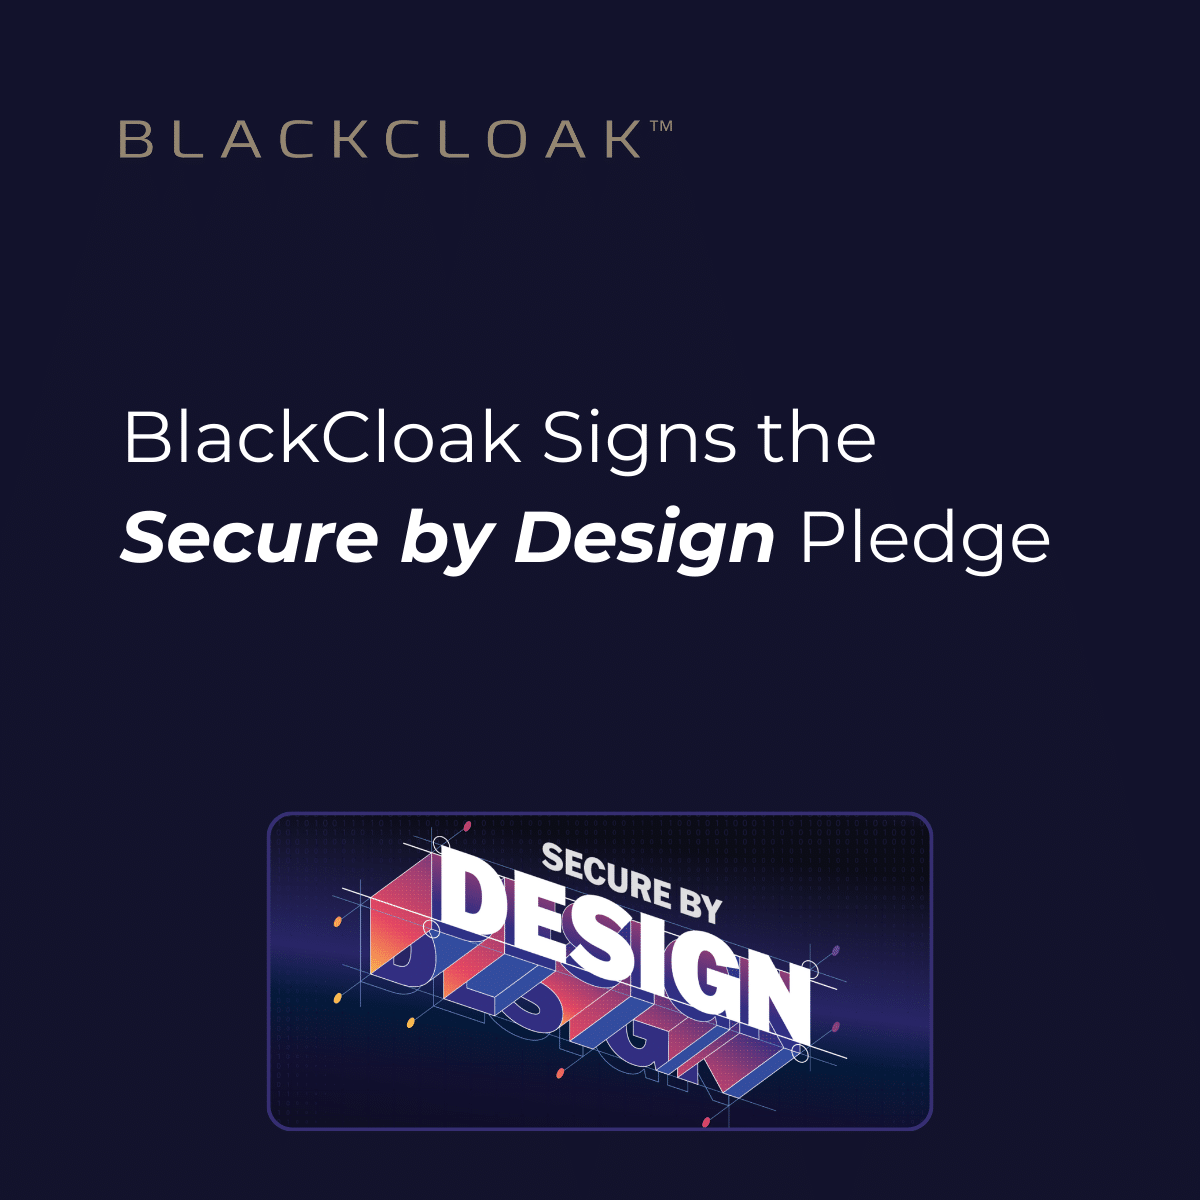 BlackCloak Signs the Secure by Design Pledge